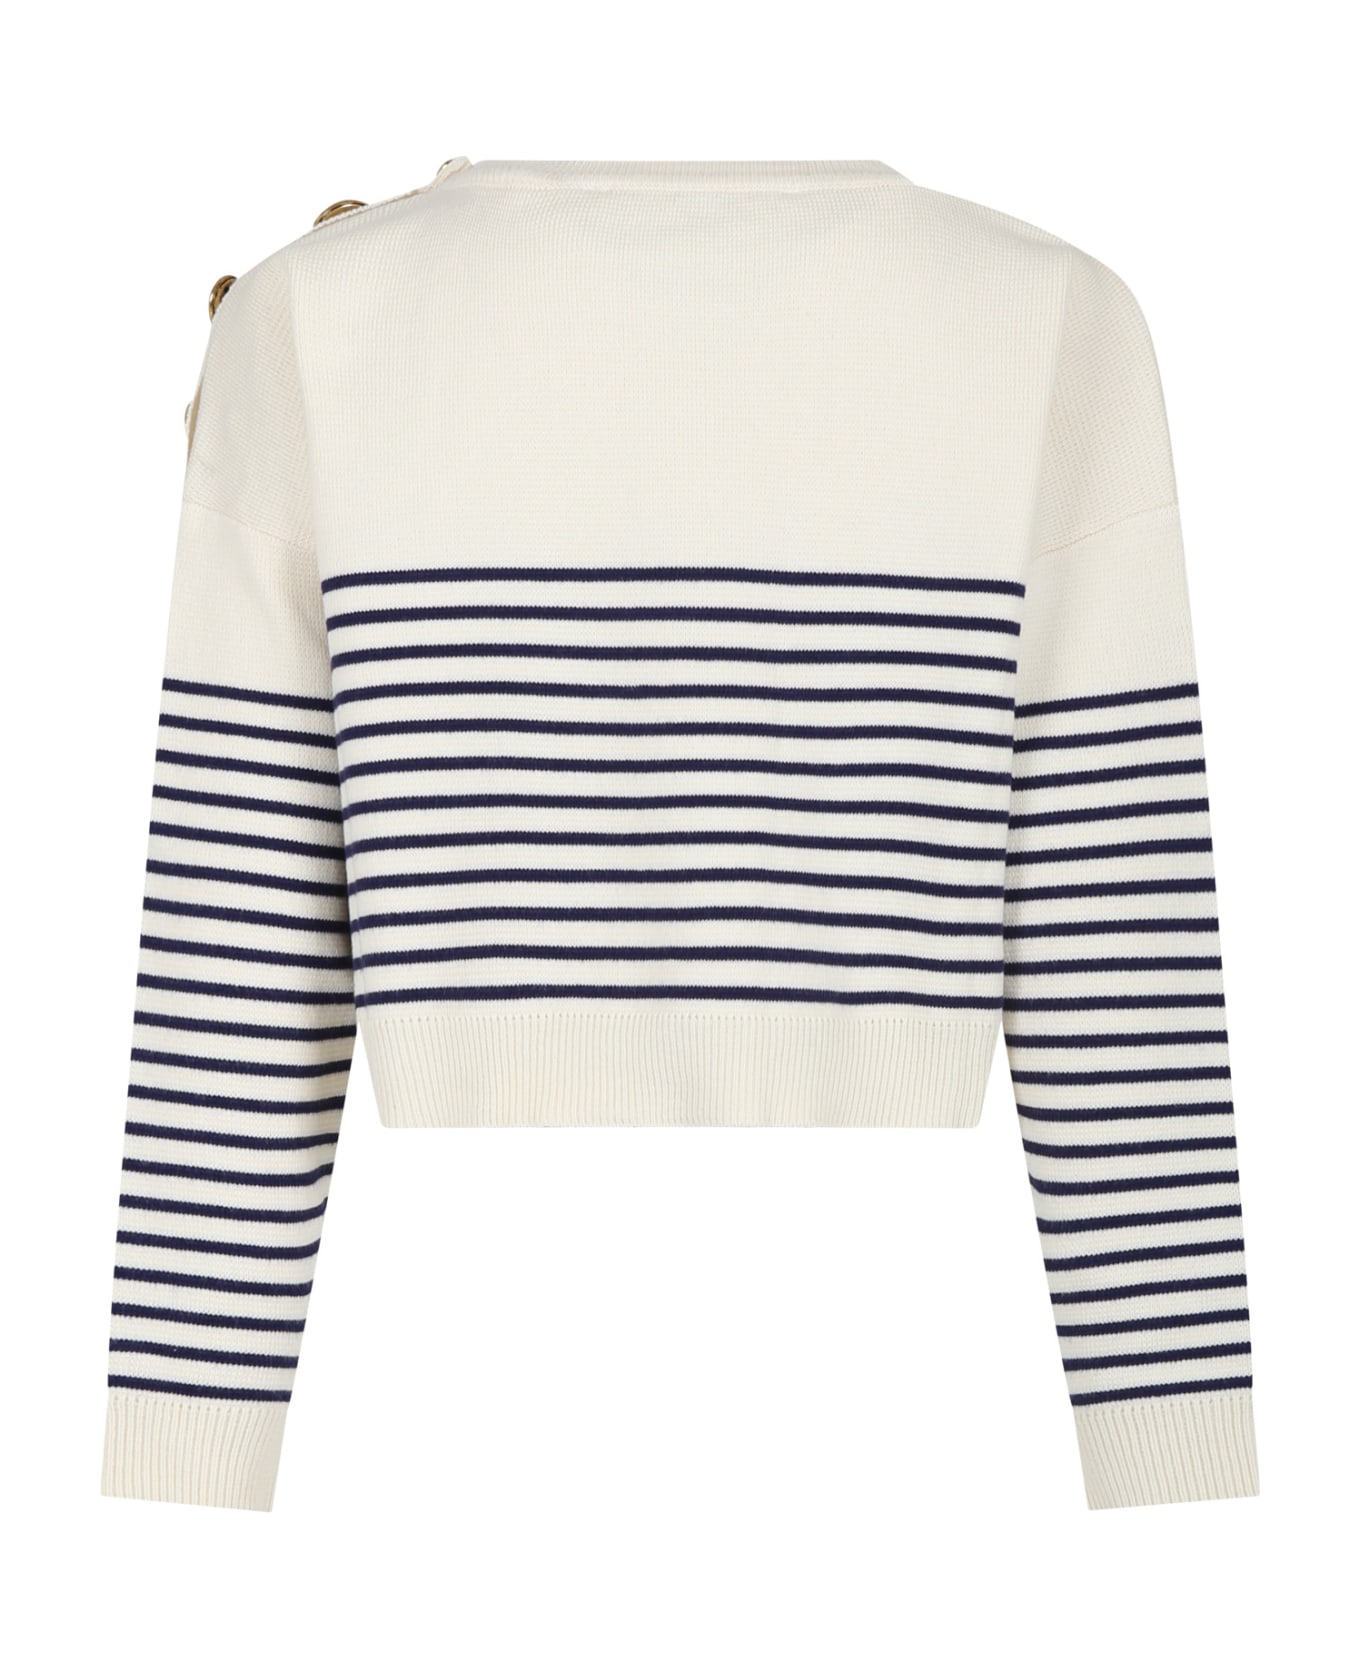 Philosophy di Lorenzo Serafini Kids Ivory Sweater For Girl With Logo - Ivory